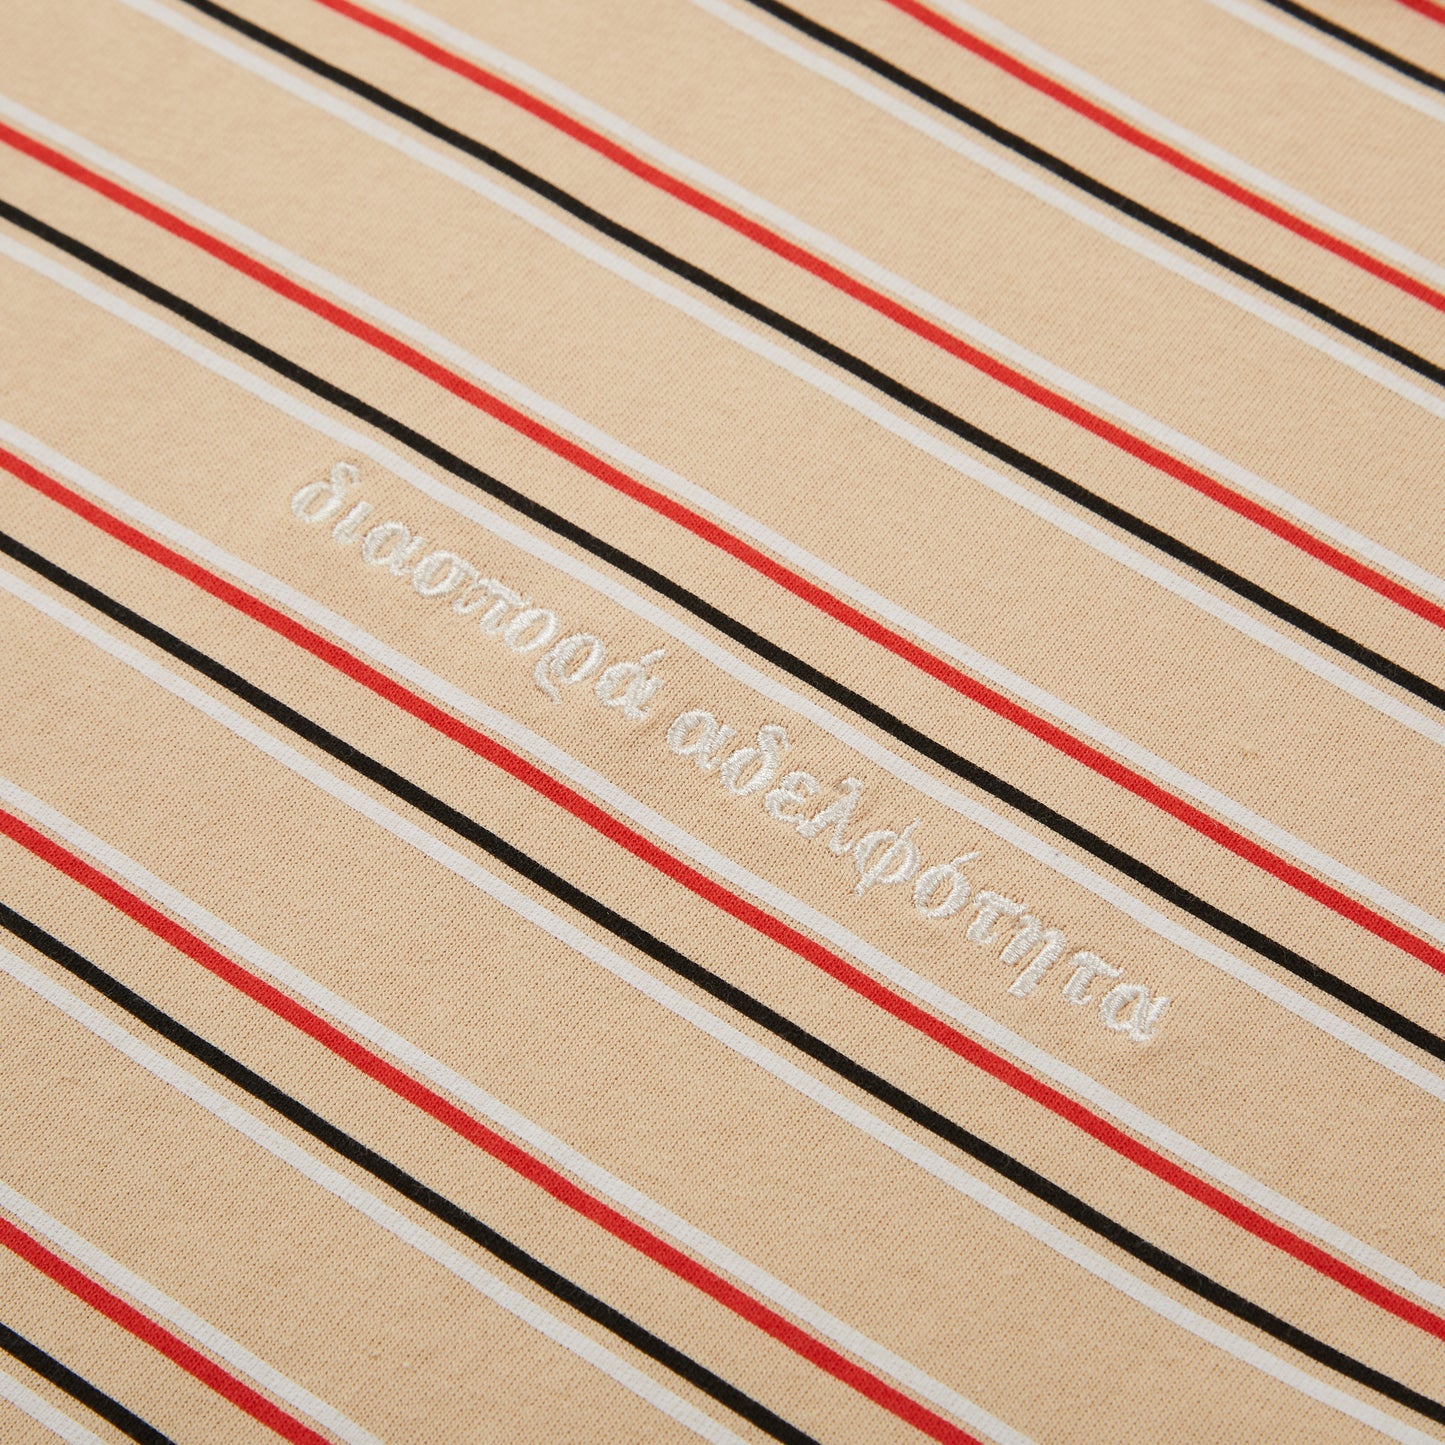 Diaspora skateboards/Printed Stripe S/S Top(Pink Beige)